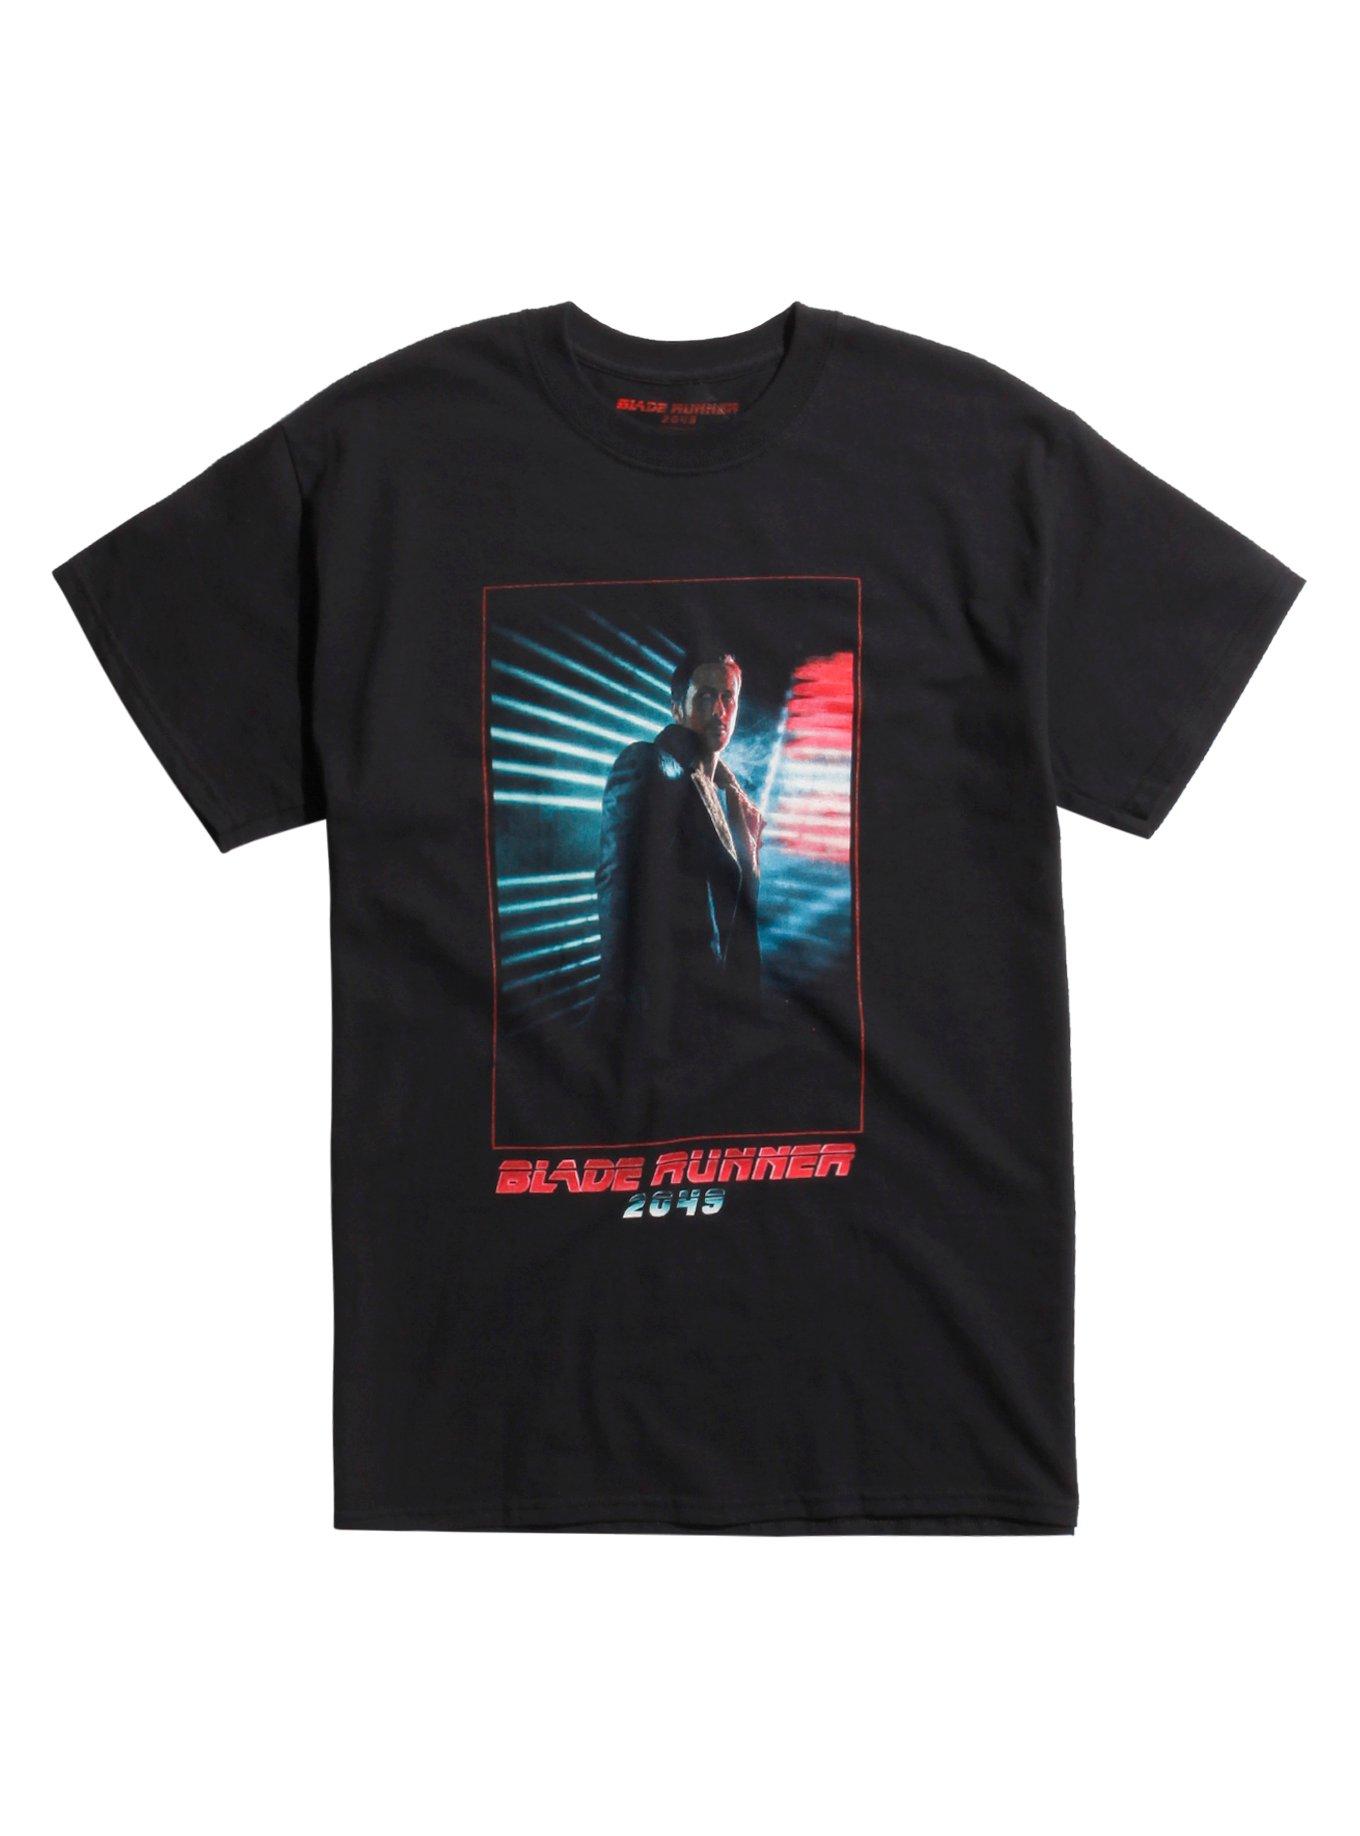 Blade Runner 2049 Officer K T-Shirt, BLACK, hi-res